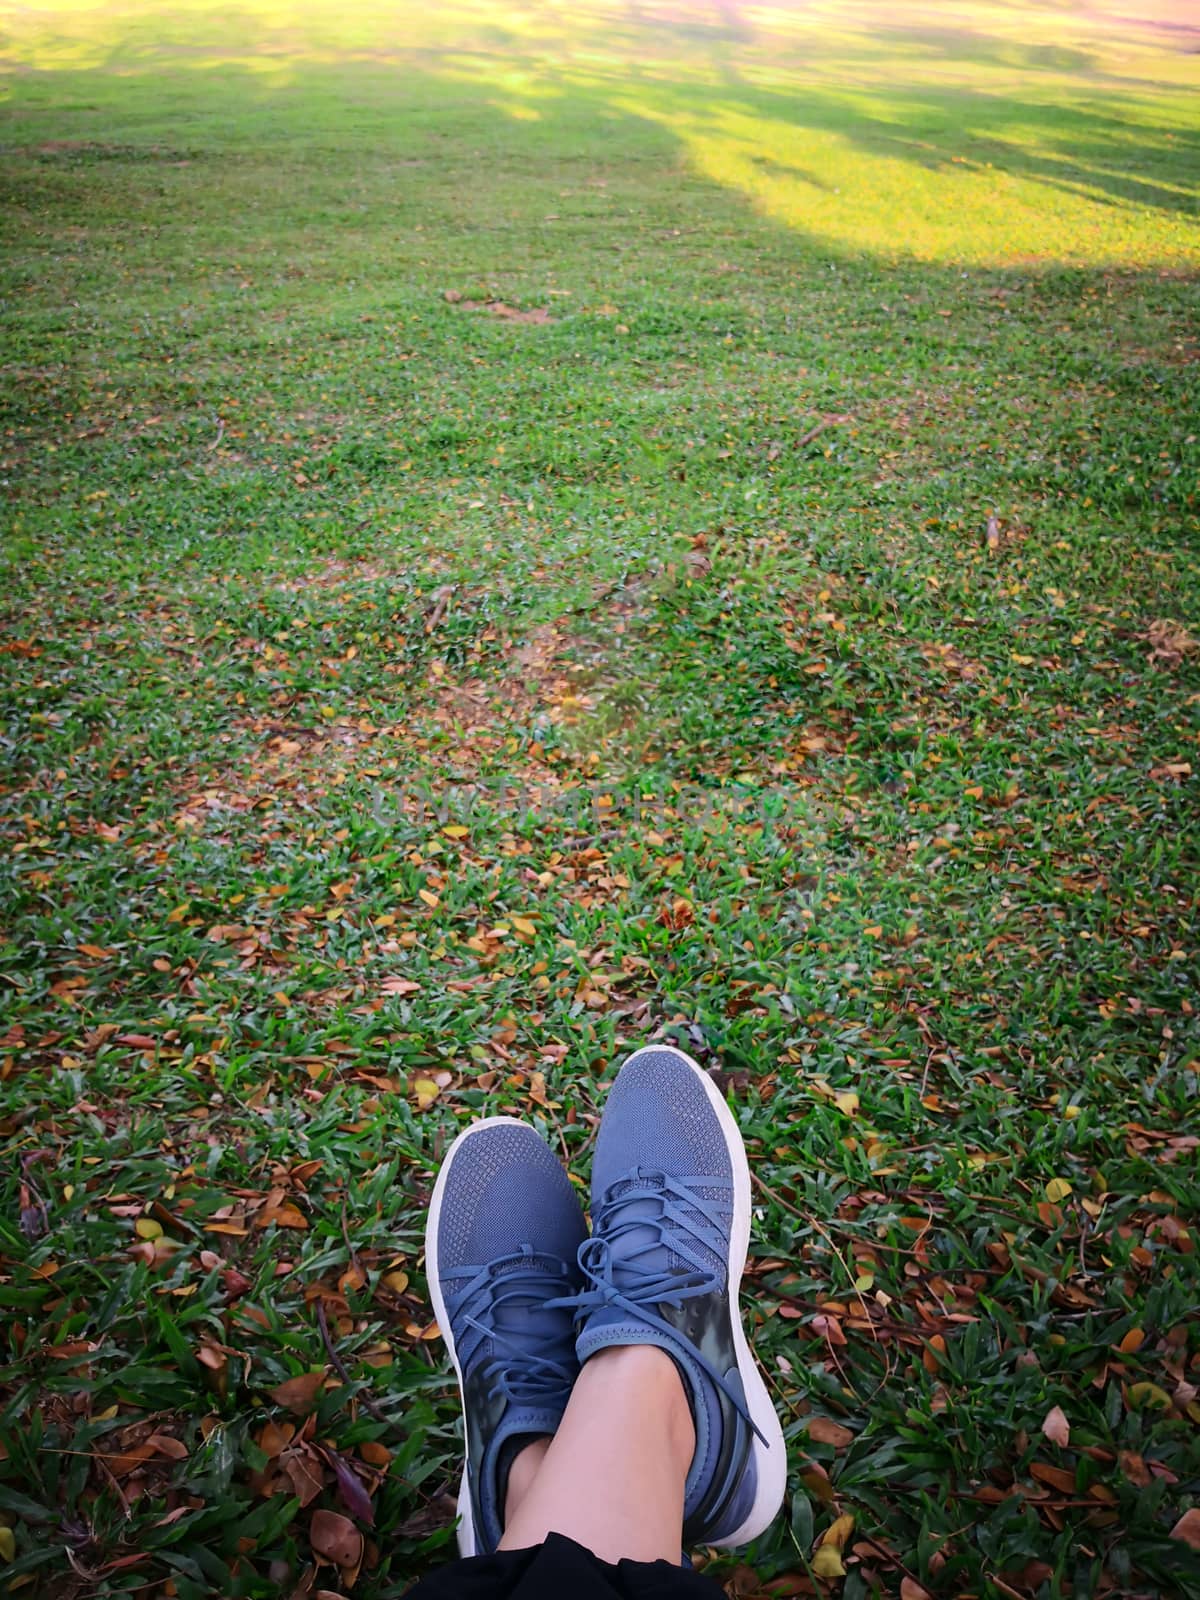 Woman's legs in grey shoes sit on dry leaves by feelartfeelant